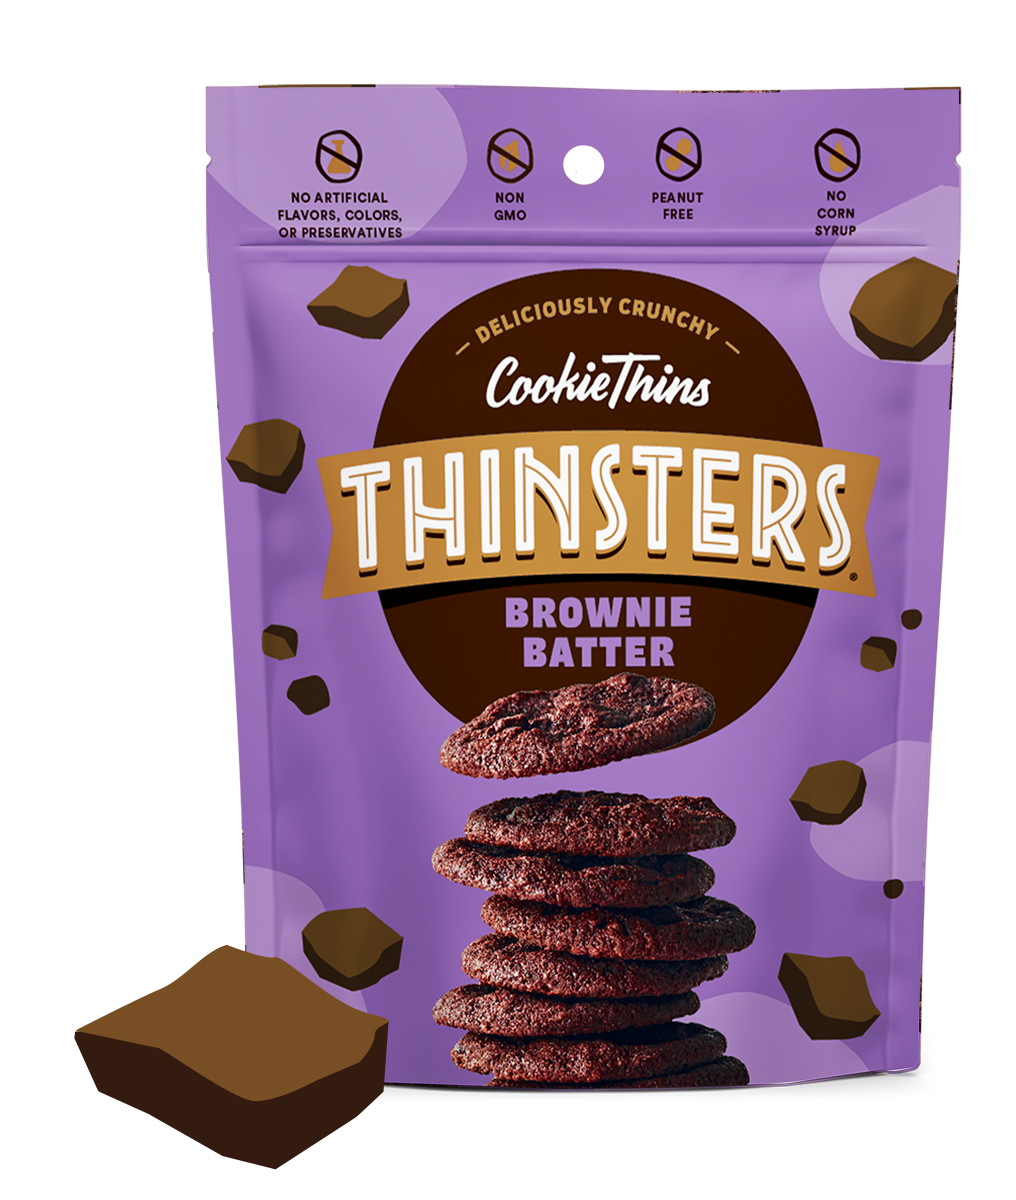 Cookie Thins Thinsters Brownie Batter